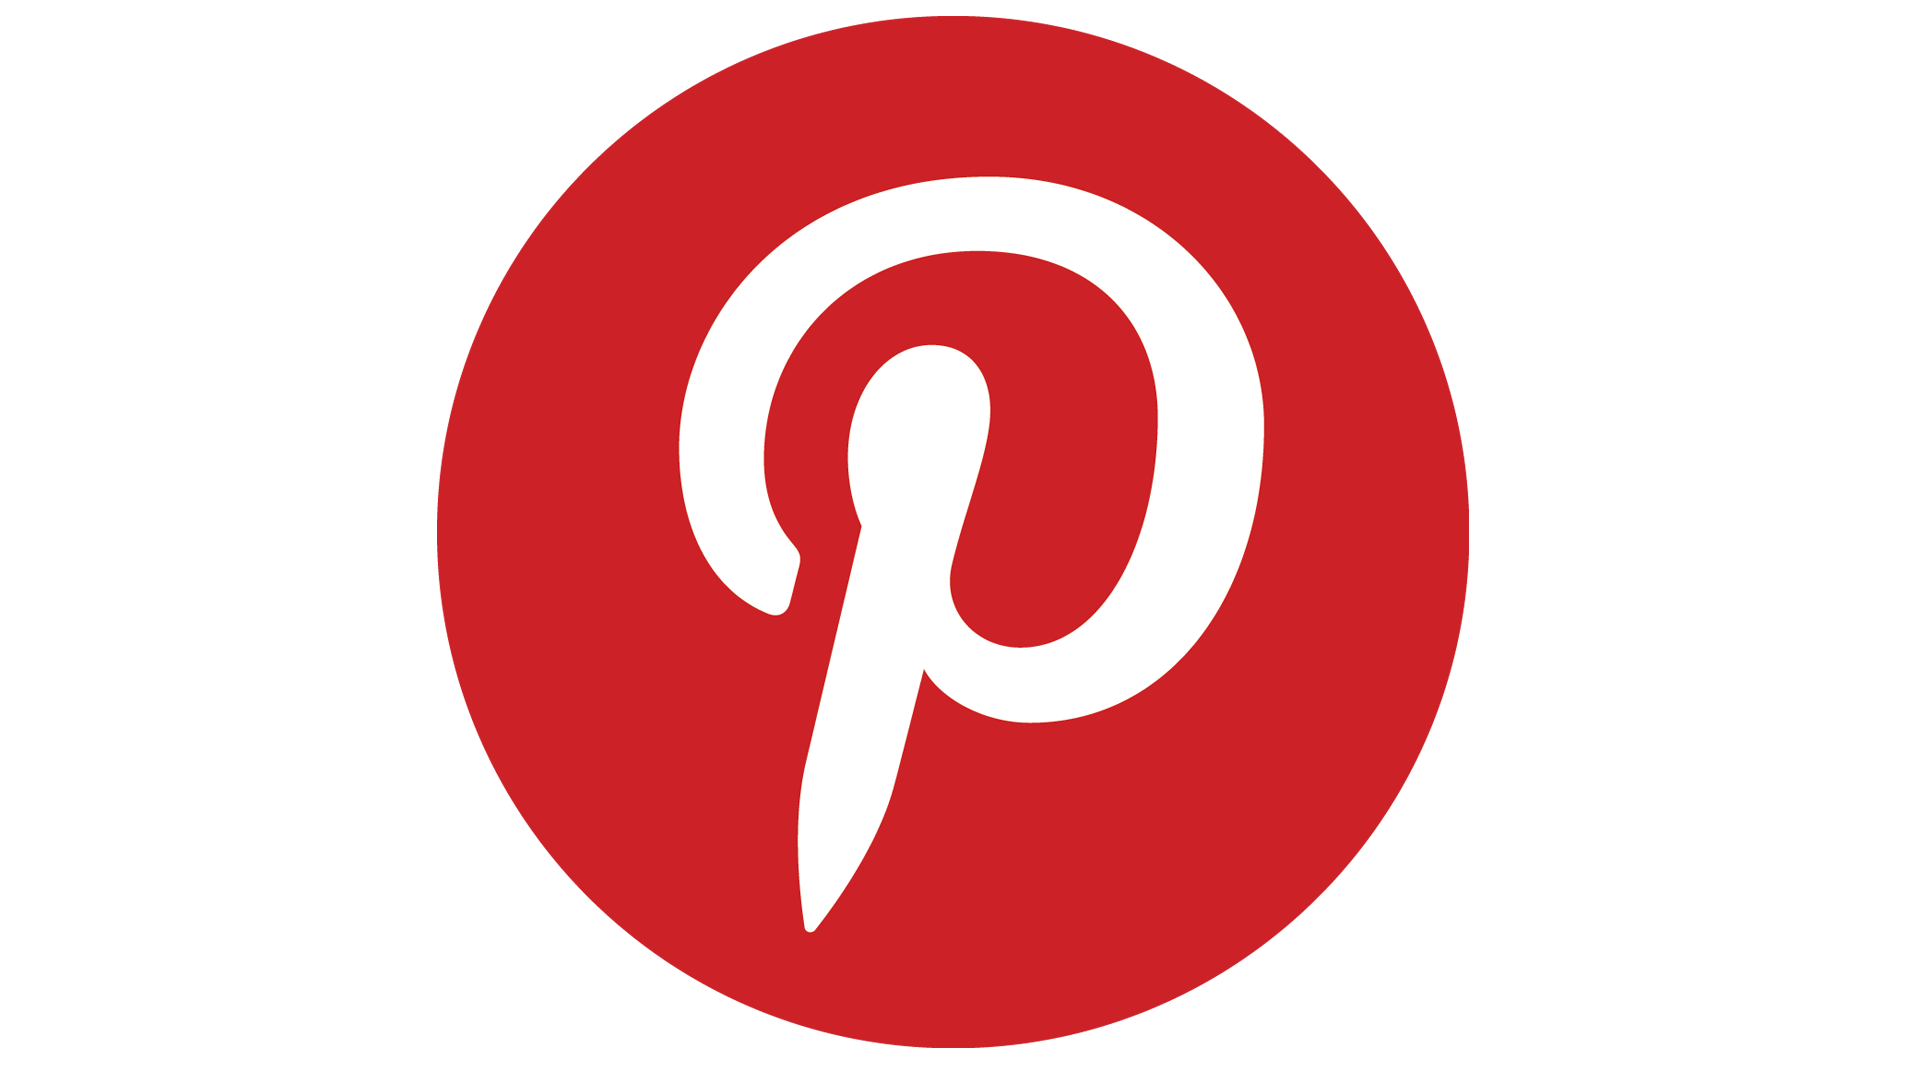 havik verdrievoudigen Kabelbaan Pinterest Is An Underappreciated Growth Story (NYSE:PINS) | Seeking Alpha